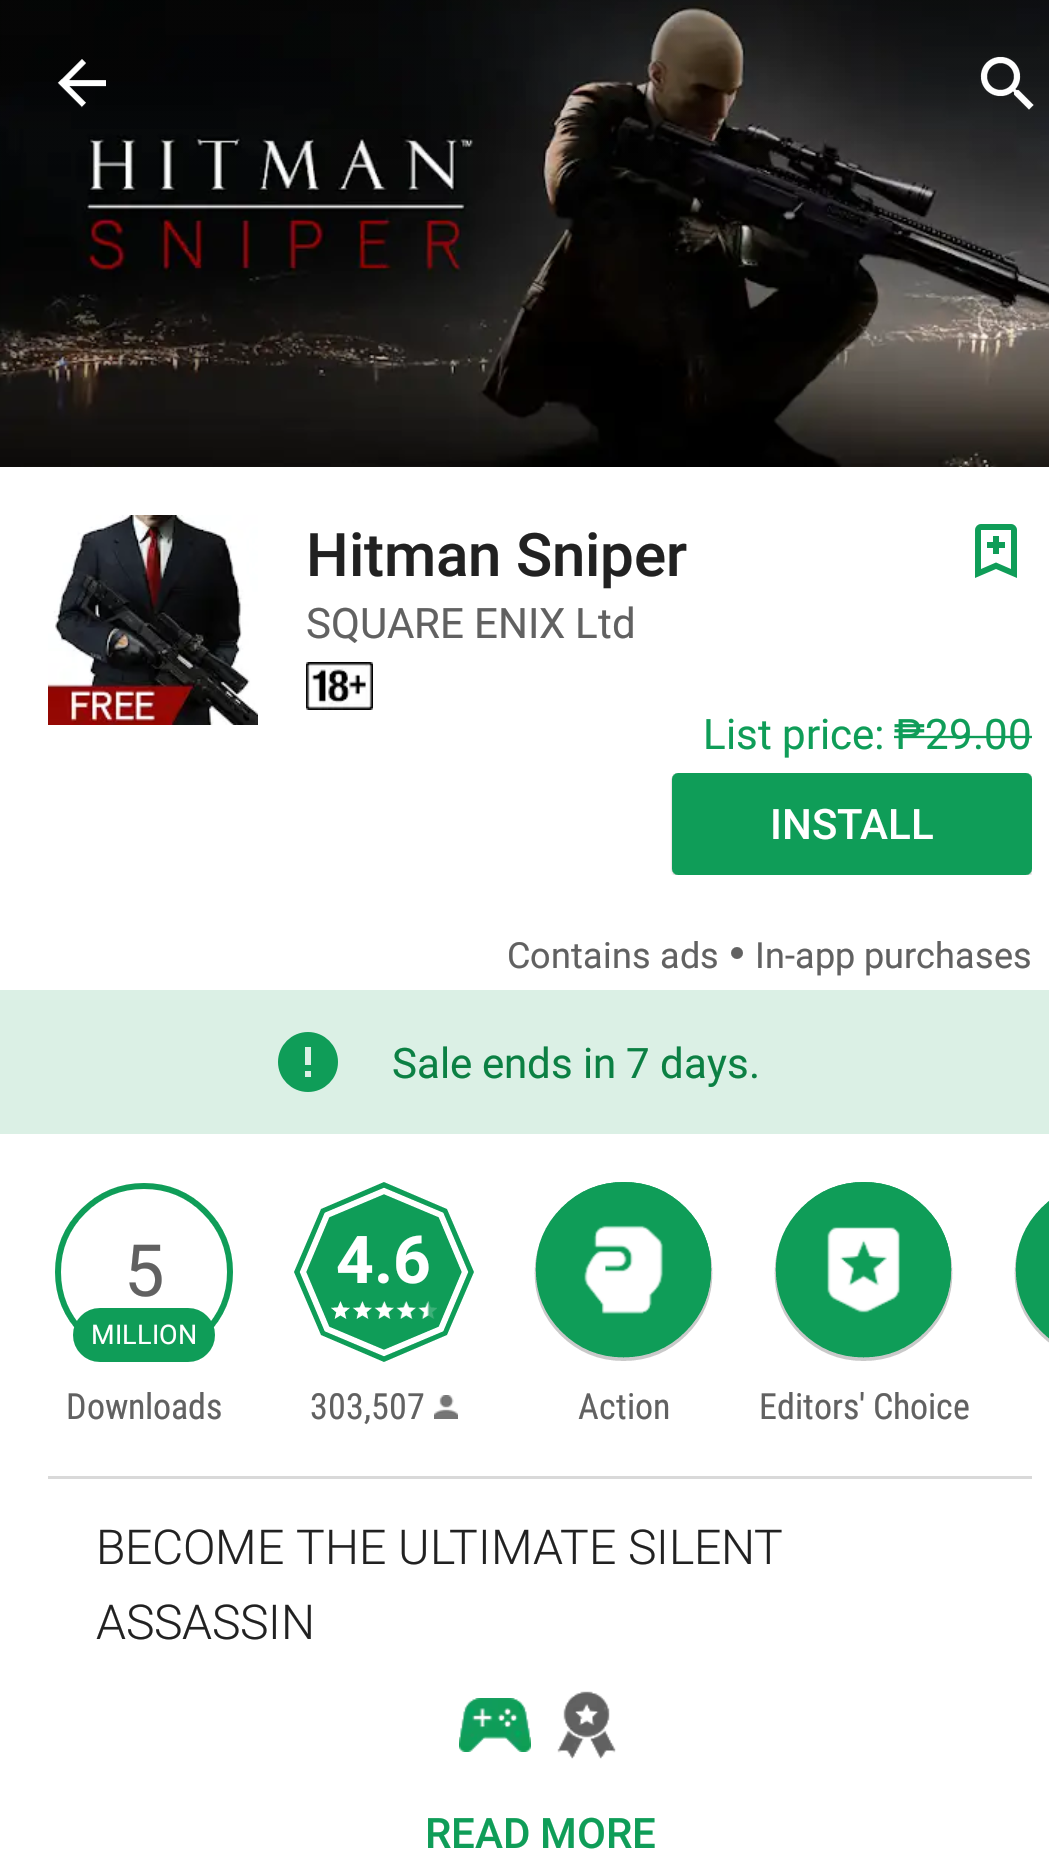 Hitman Sniper is free on Google Play. — Steemit